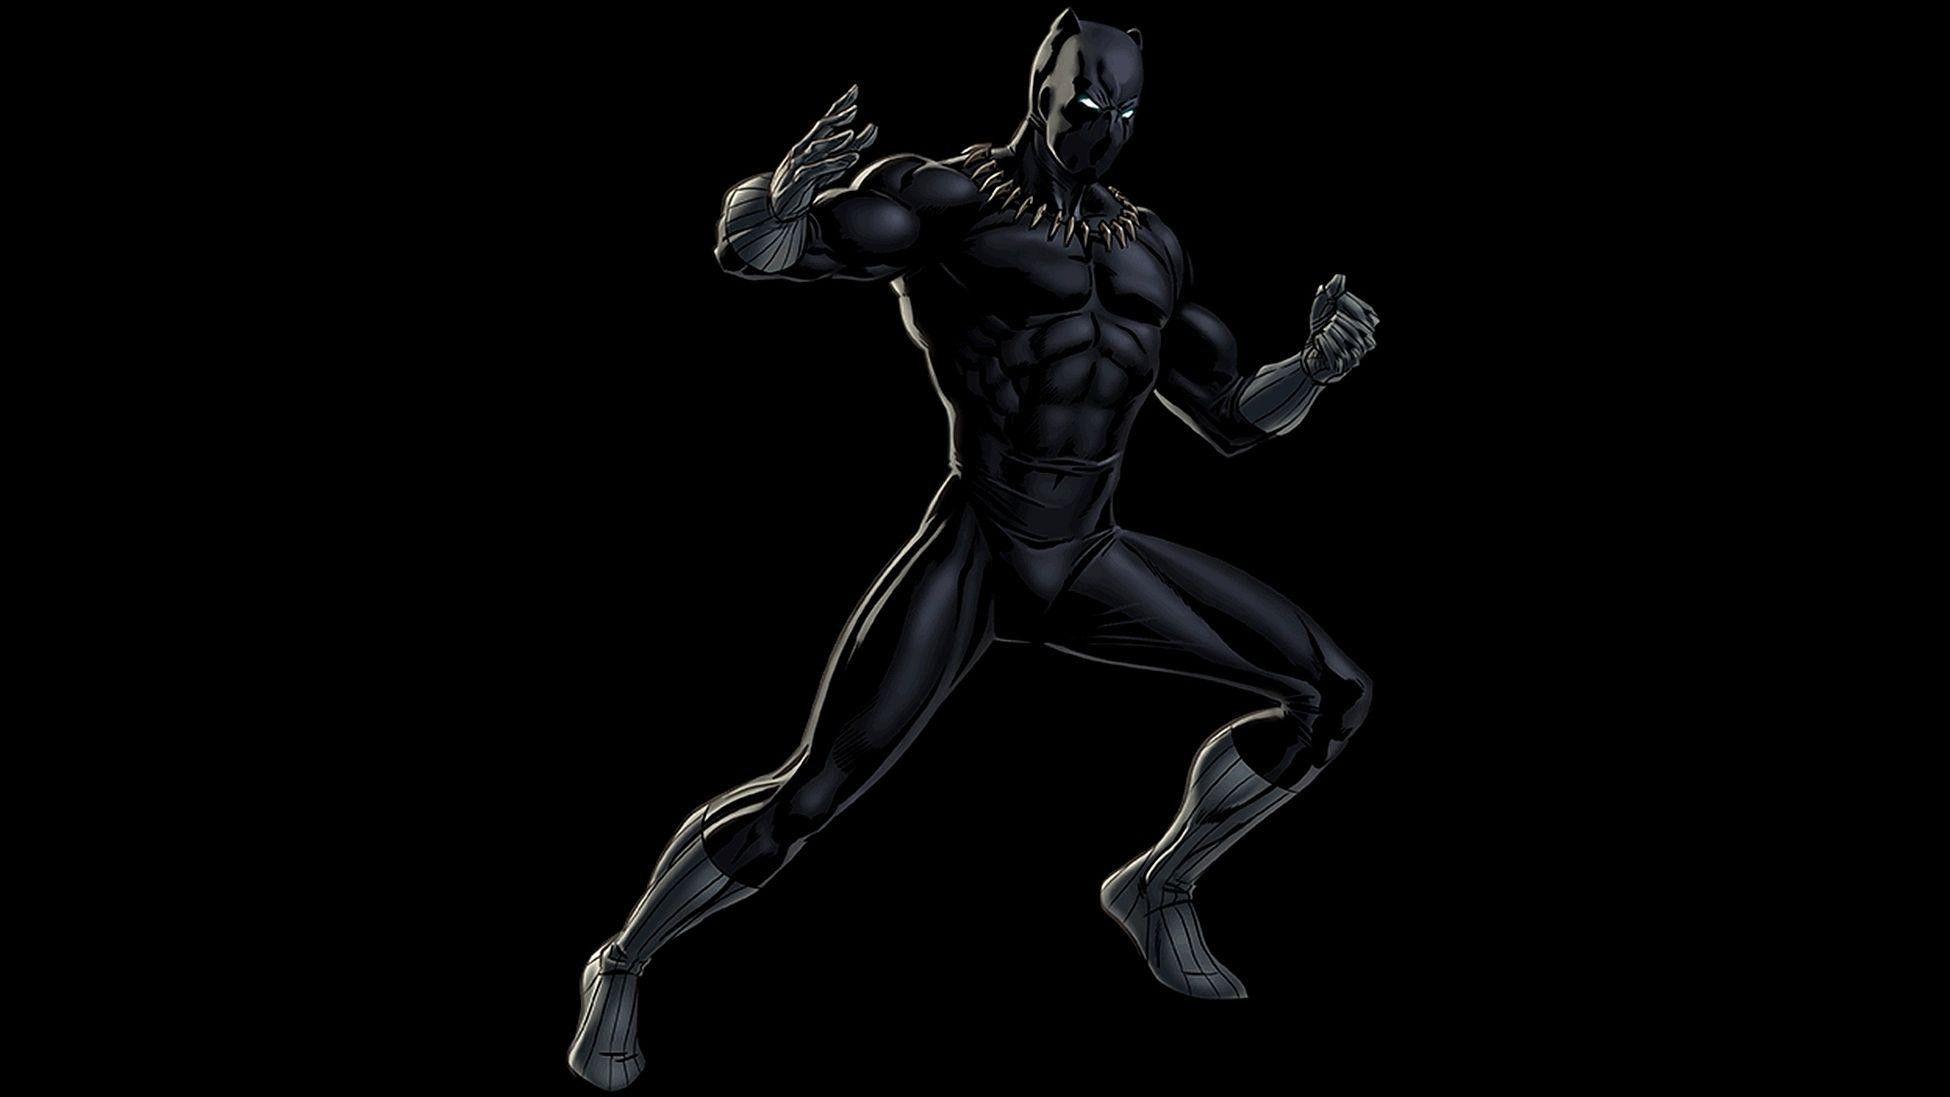 Black Panther Marvel Wallpaper.com Wallpaper World